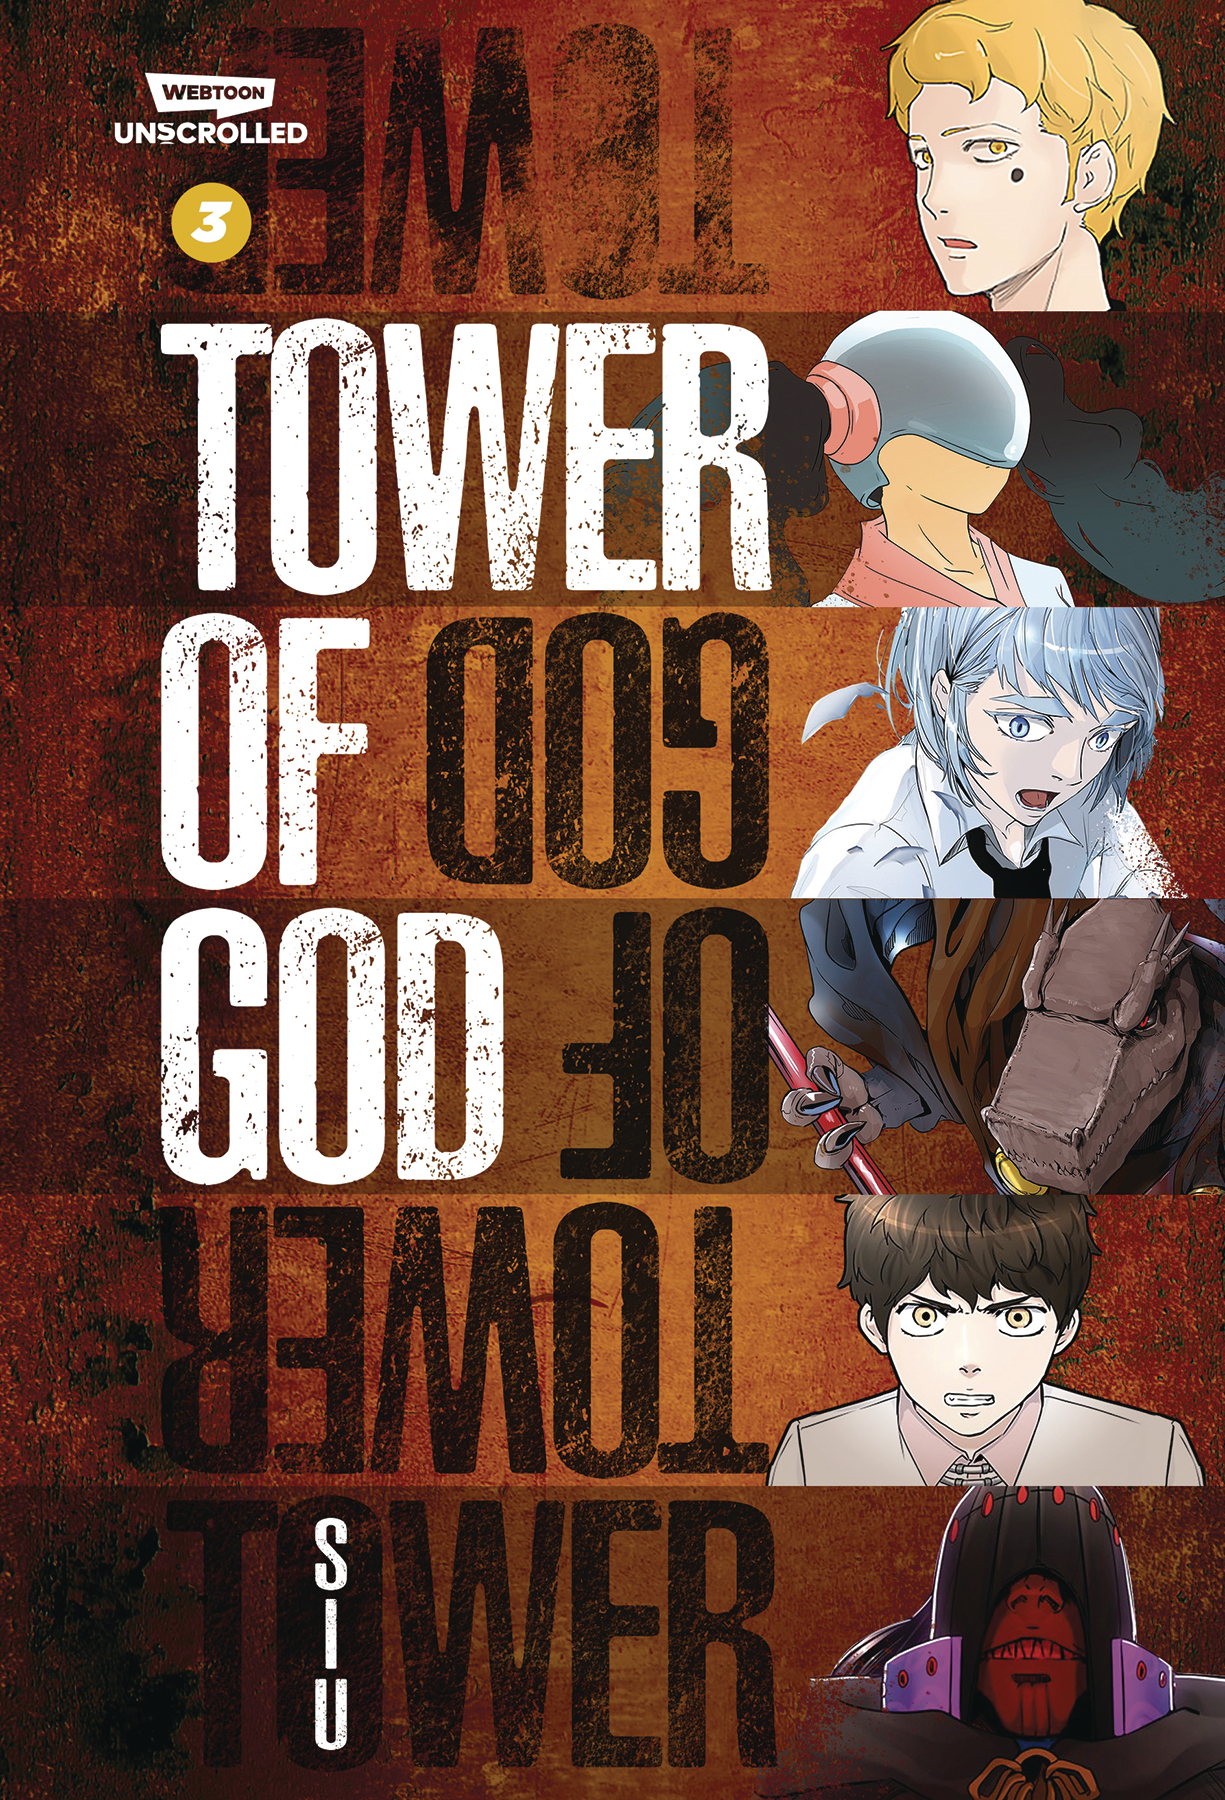 Tower of God Manga Volume 3